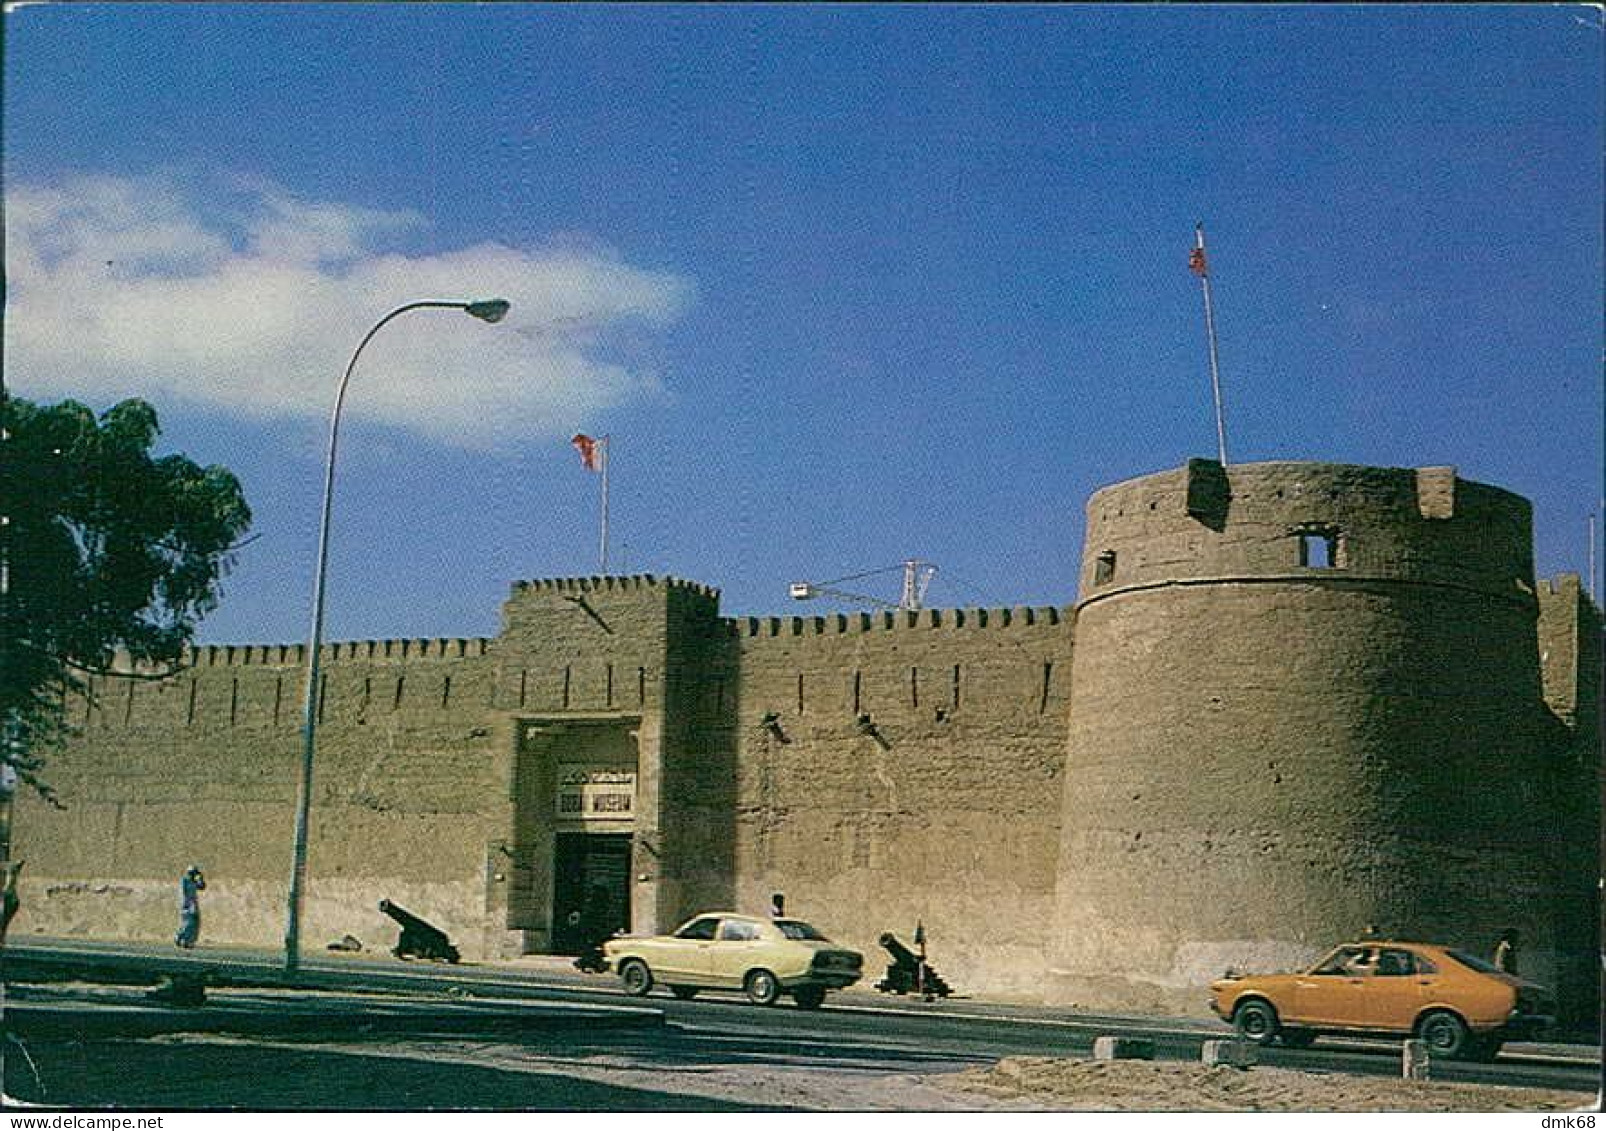 UNITED ARAB EMIRATES - DUBAI MUSEUM - PHOTO & COP. FAROOK INTERN. STATIONERY - 1970s/80s (17310) - Verenigde Arabische Emiraten